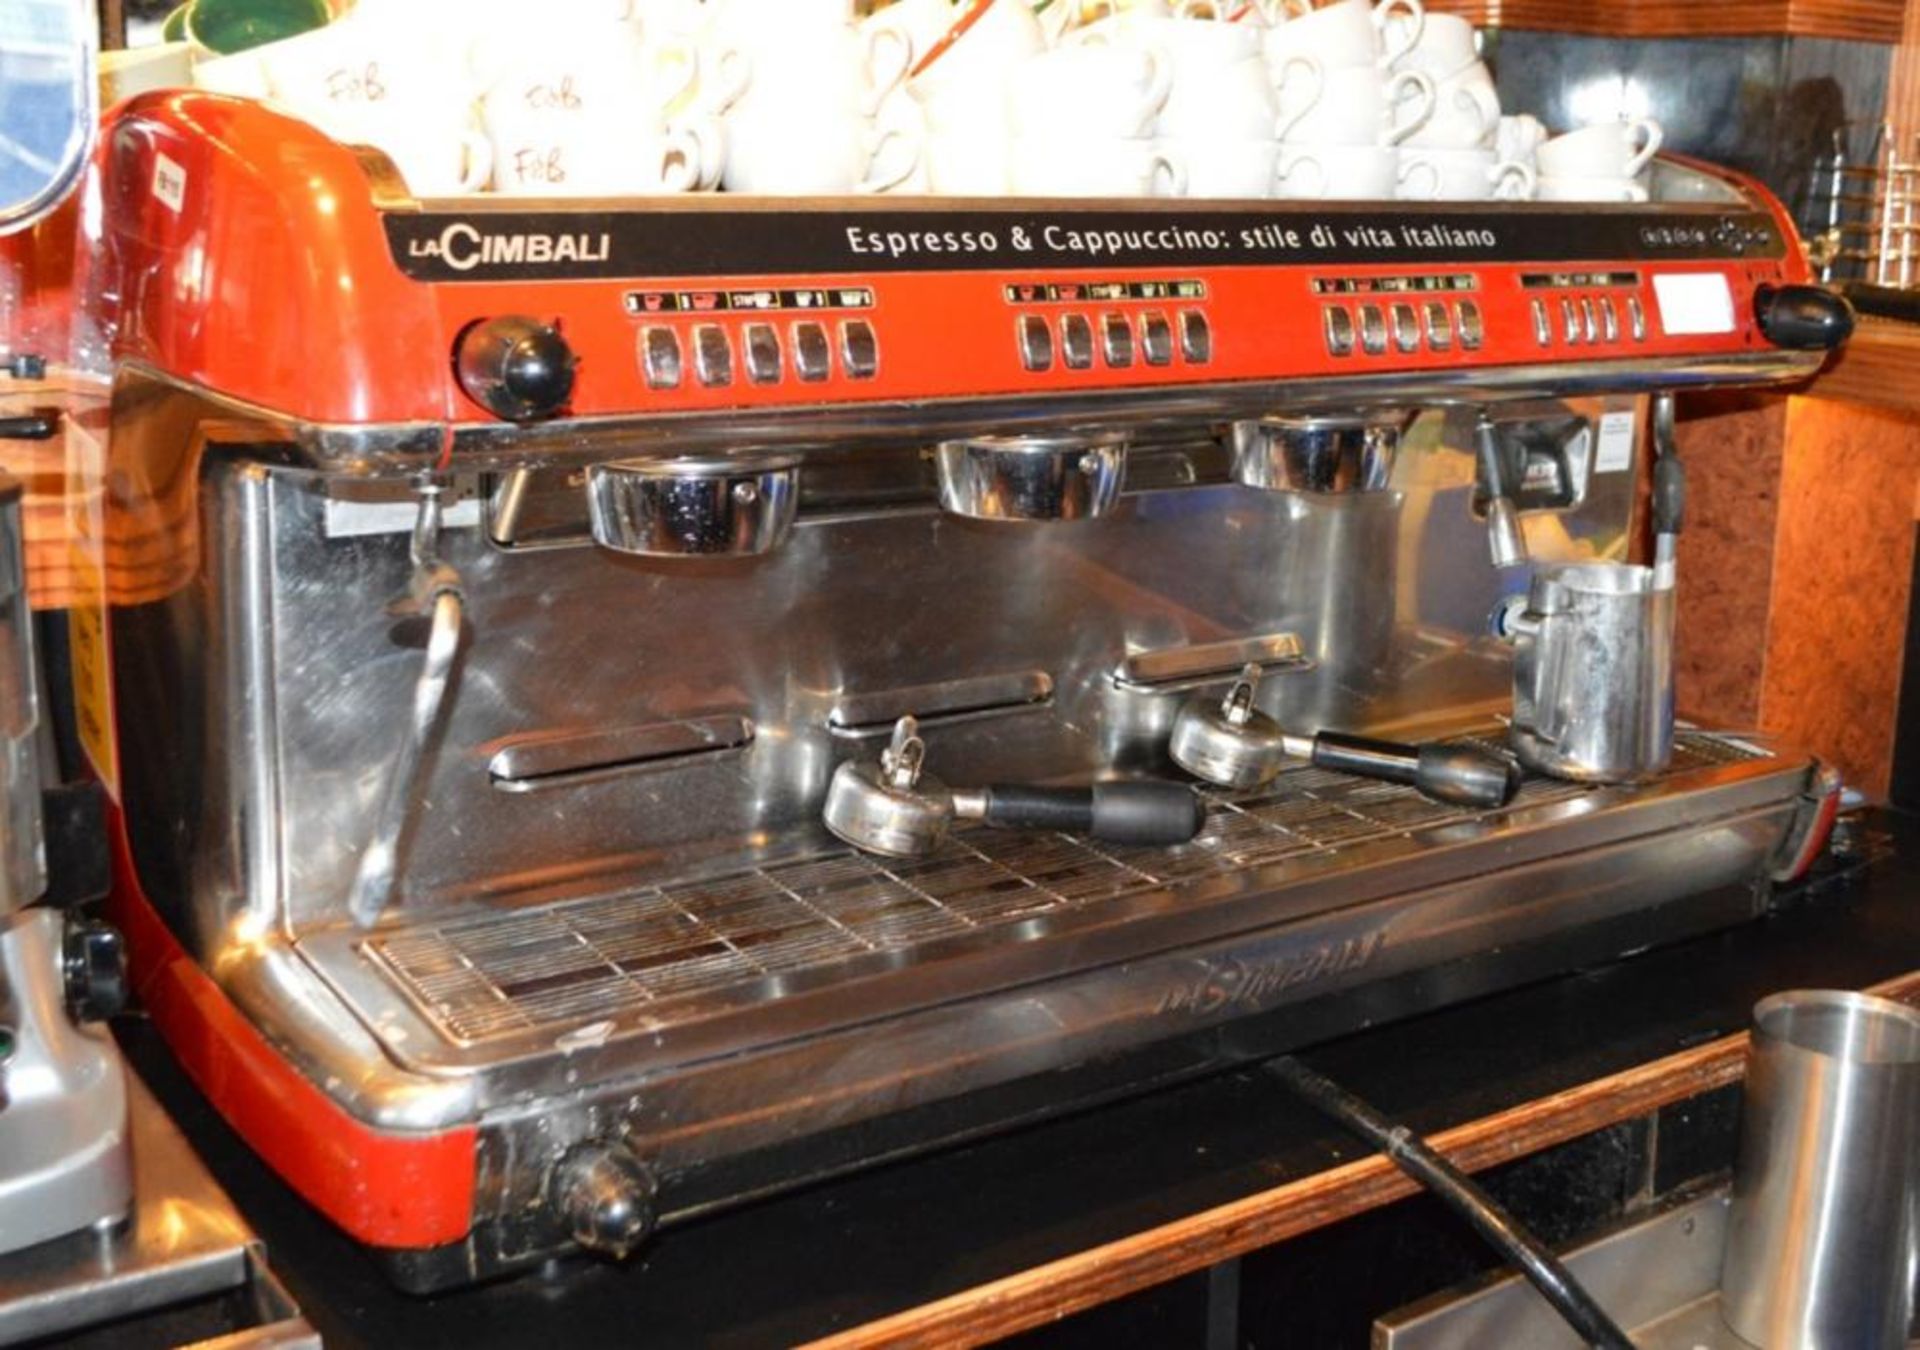 1 x La Cimbalie Espresso & Cappucino 3 Group Coffee Machine in Red - Model M39 DT3 TE - Ref FB115 -